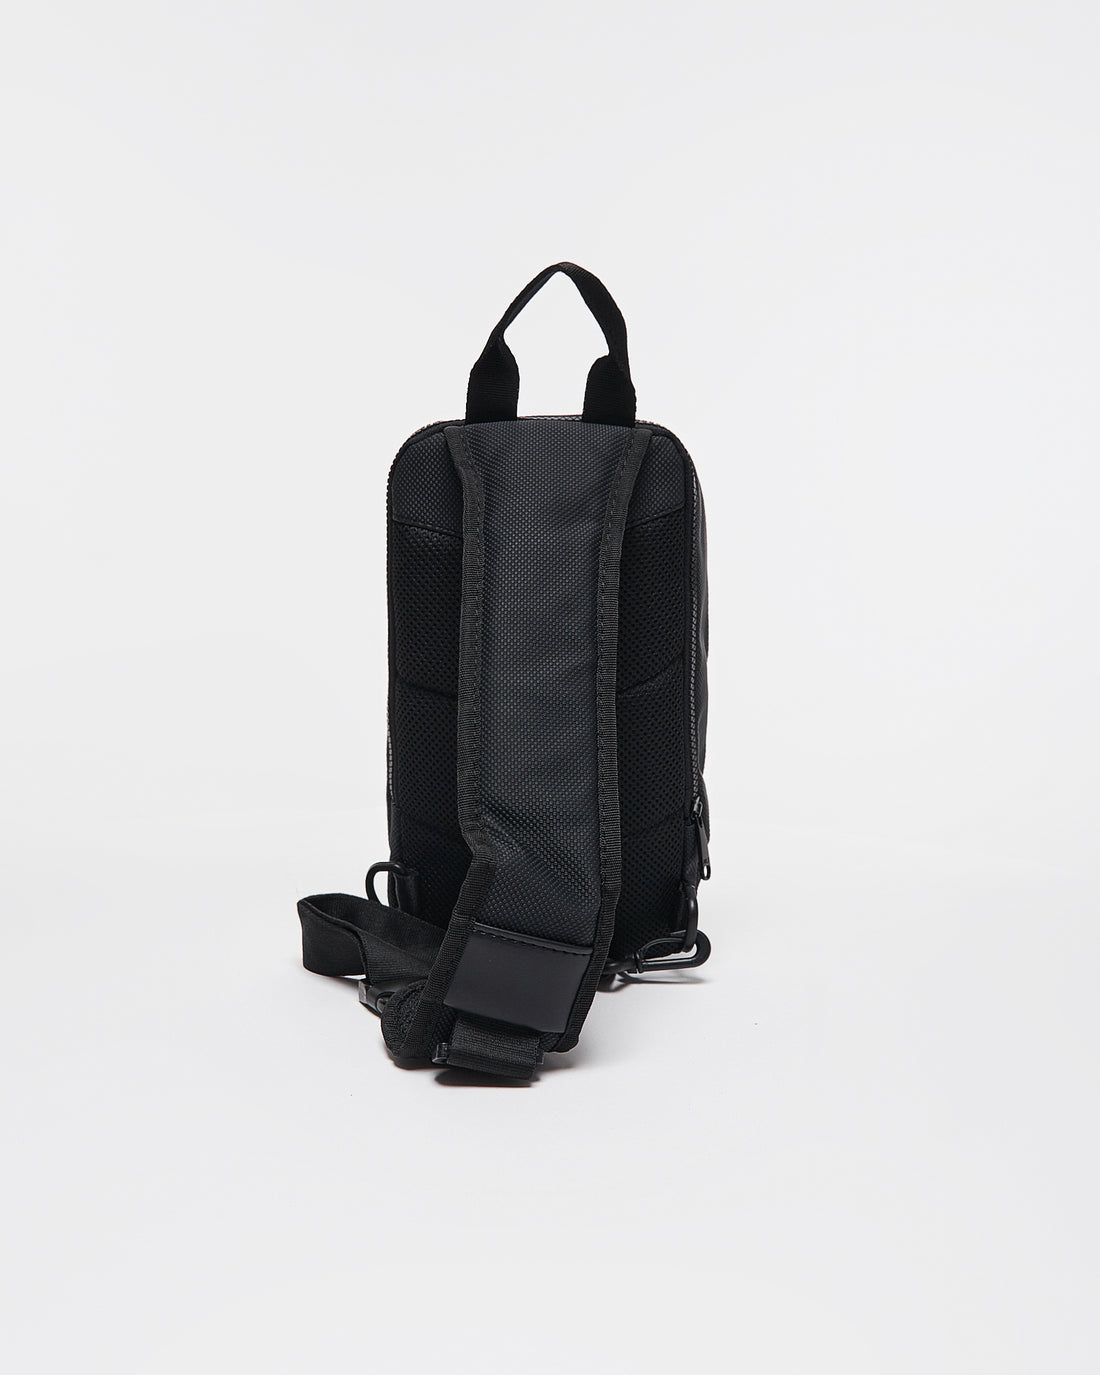 NY Black Sling Bag 17.90